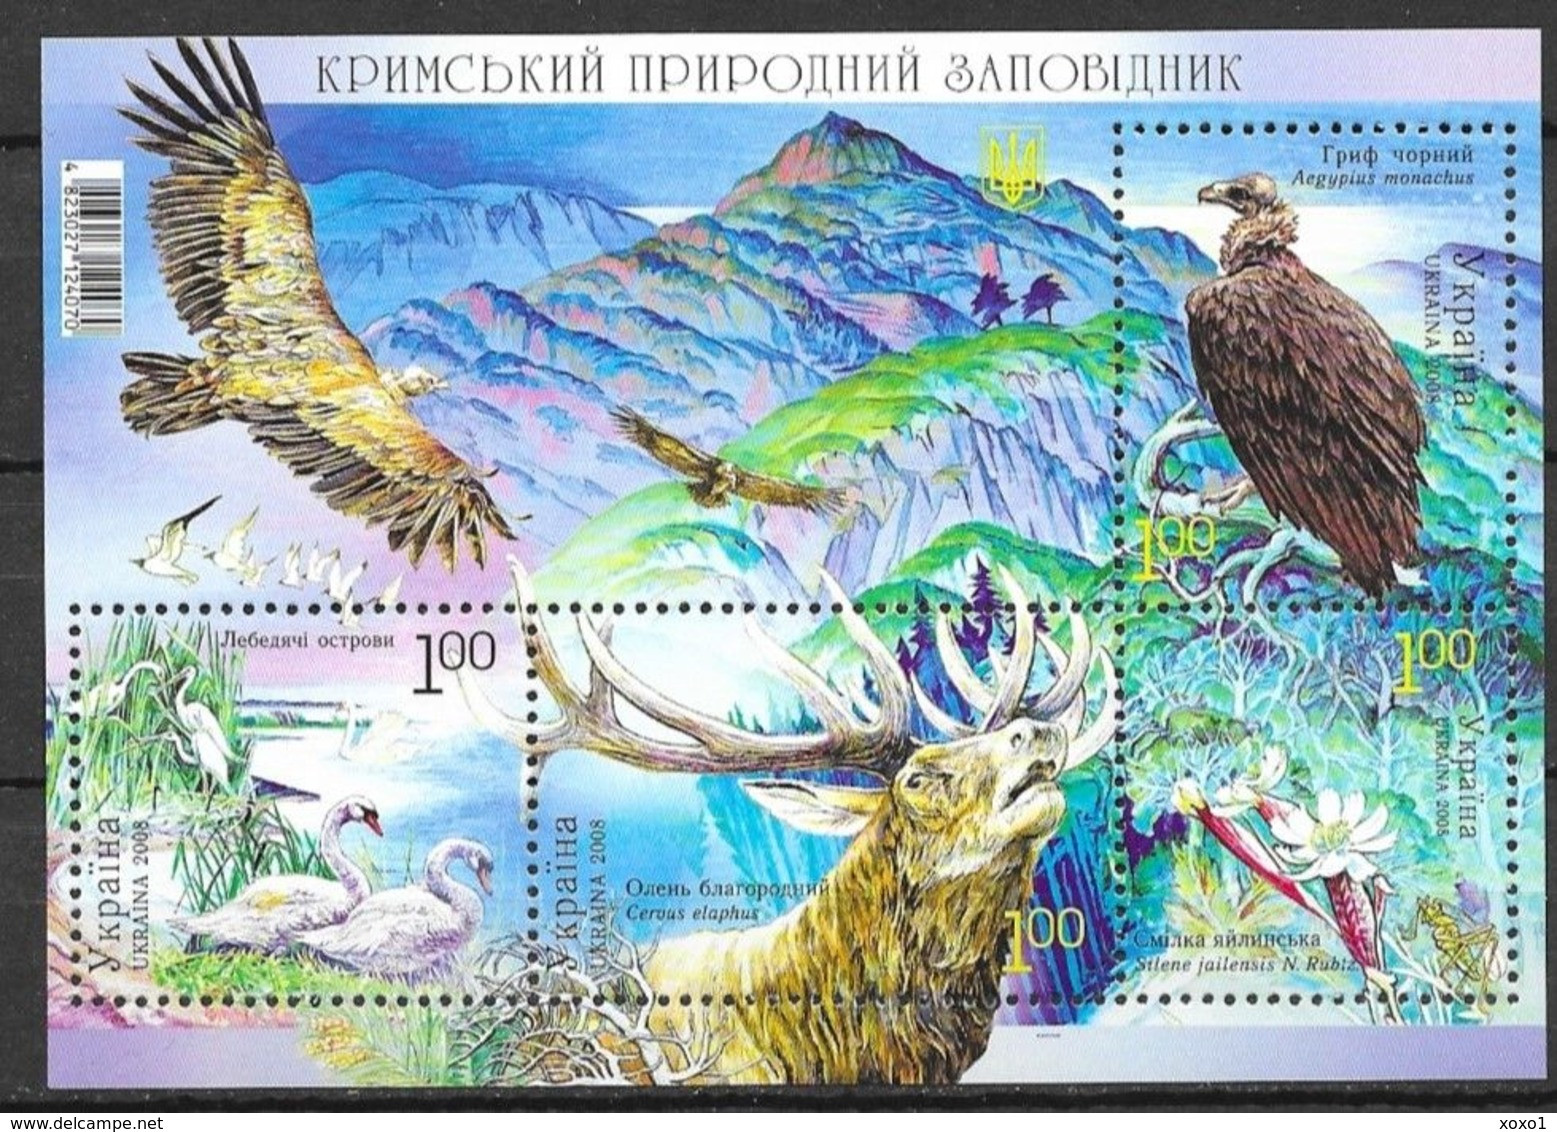 Ukraine 2008 MiNr. 973 - 976 (Block 68) Crimea Nature Reserve Birds Animals Plants S\sh  MNH ** 3,20 € - Eagles & Birds Of Prey